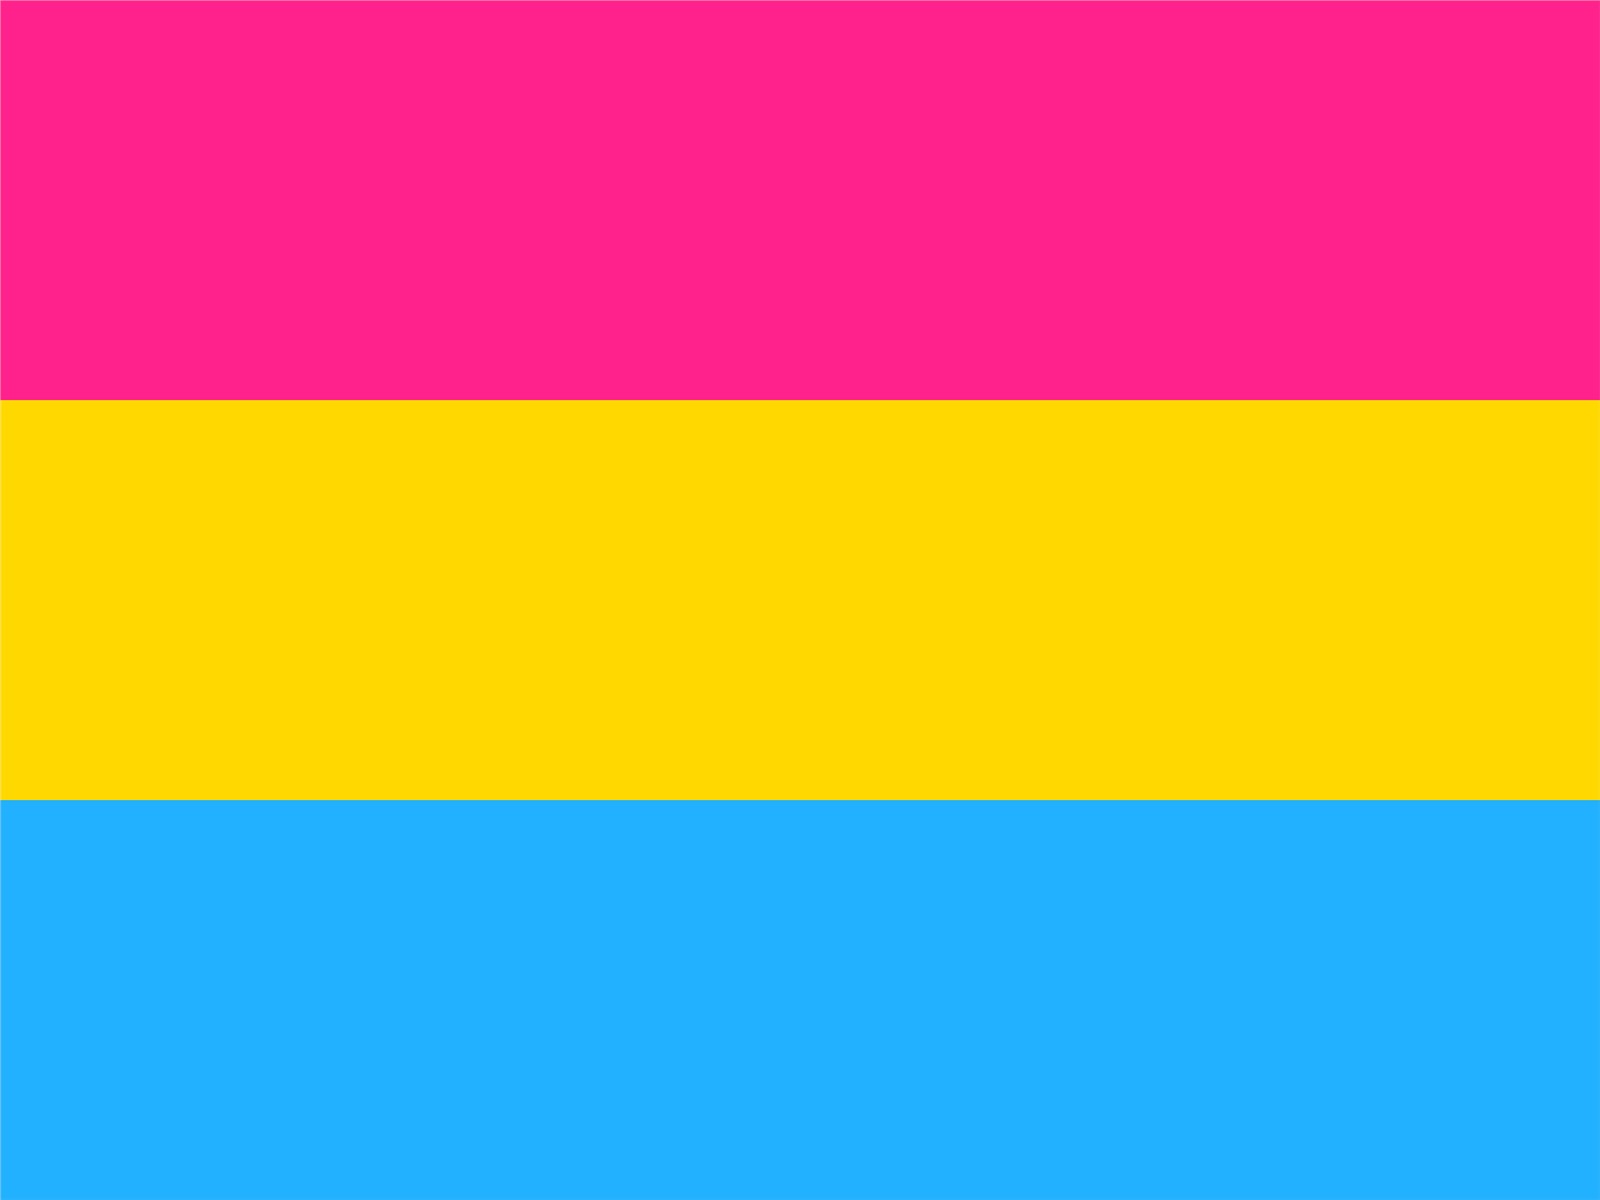 Trans gay pride flag